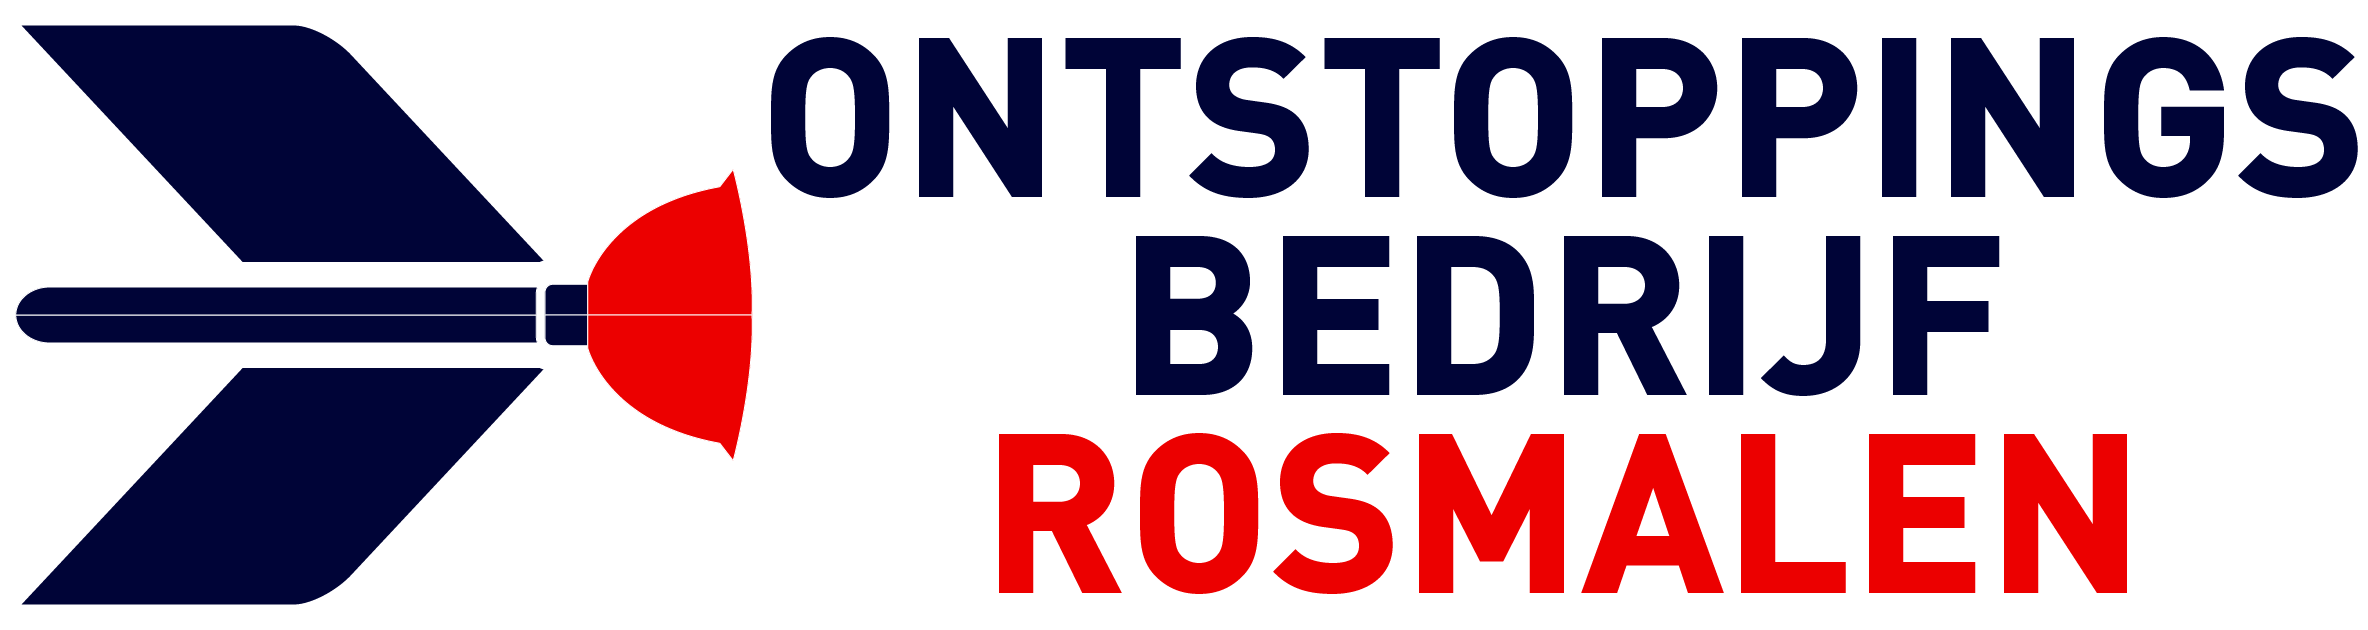 Ontstoppingsbedrijf Rosmalen logo